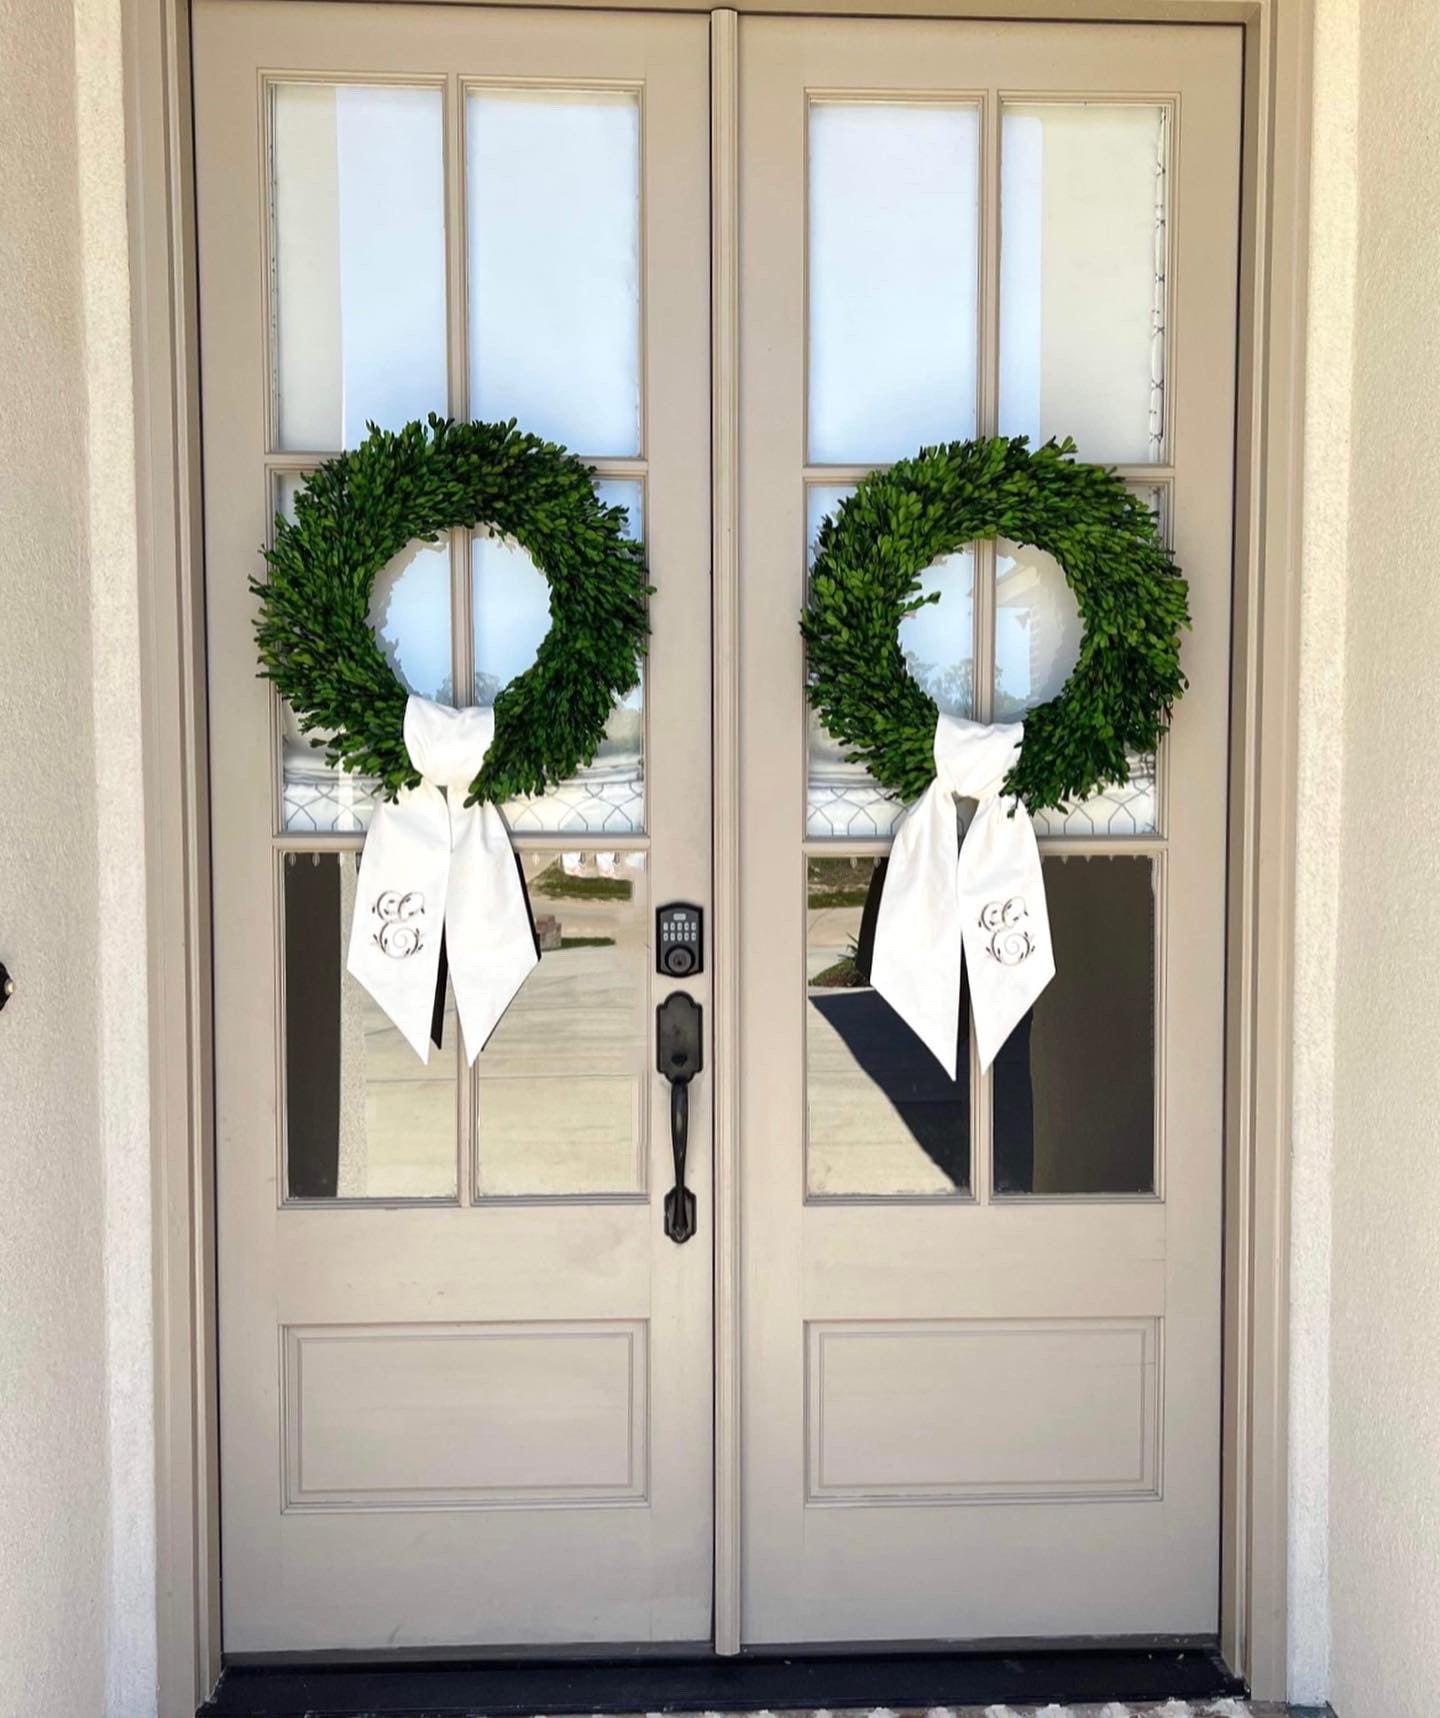 Wreath Sash – Hello Monogram Co